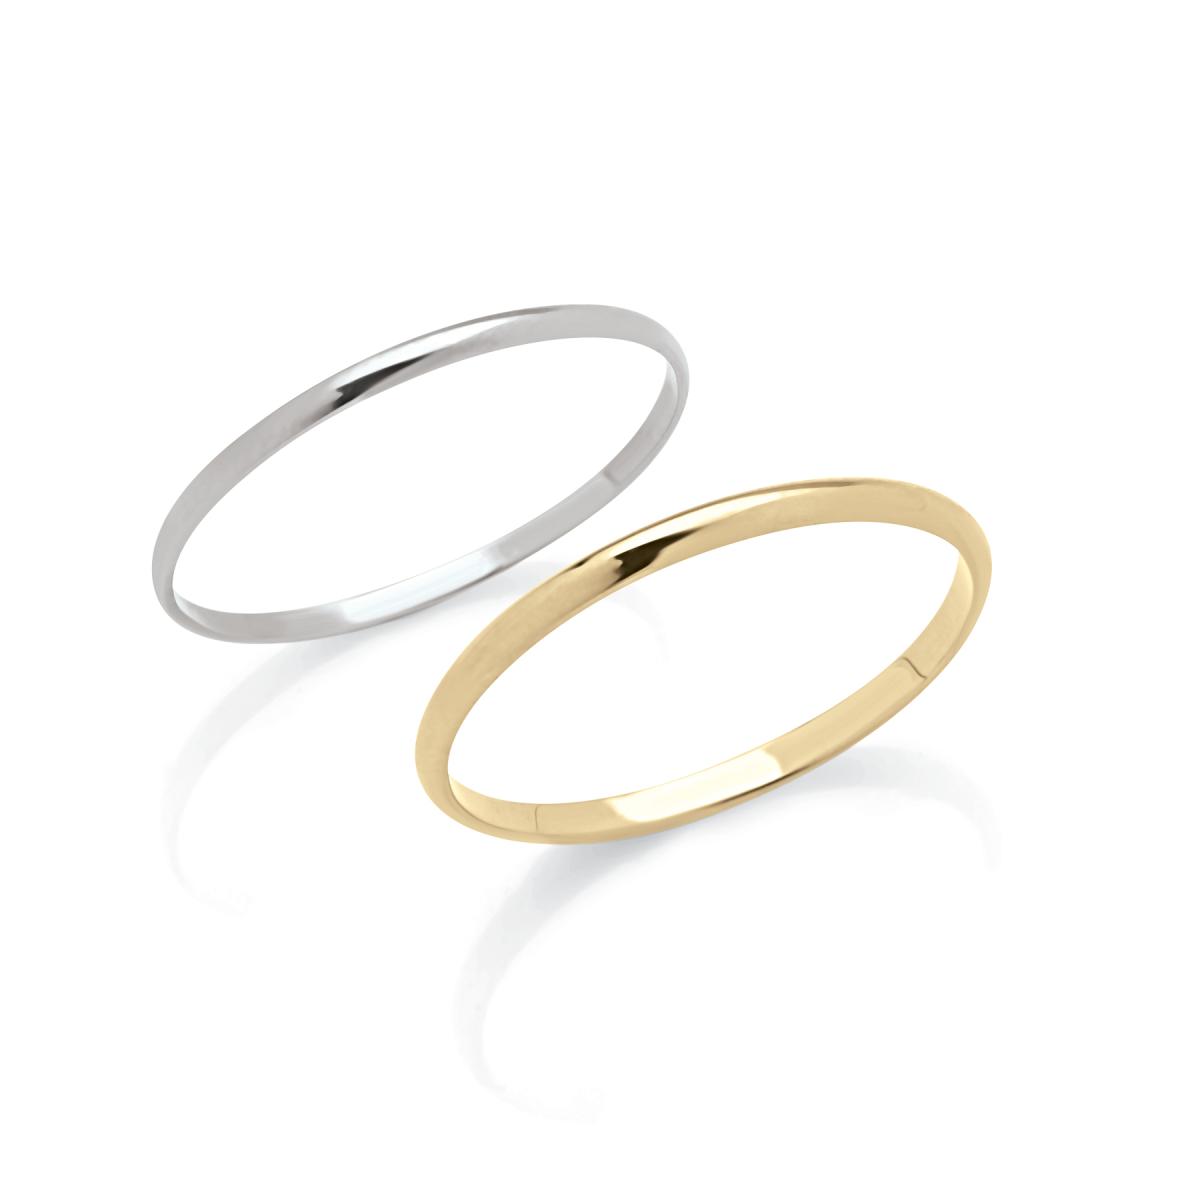 Wedding ring in 18kt gold - 573